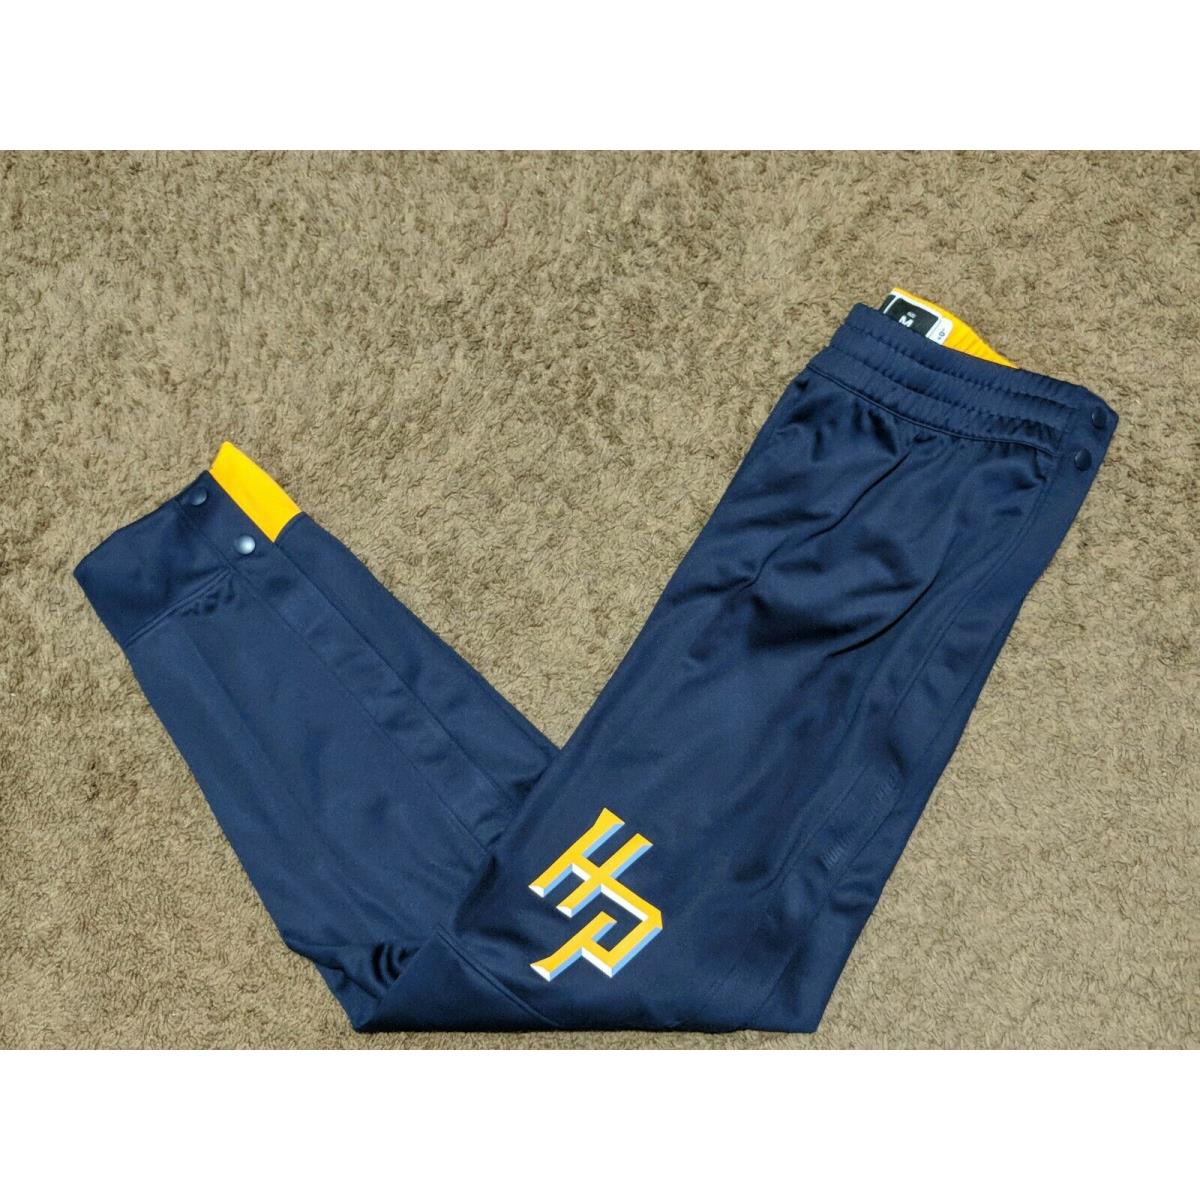 Sz M Adidas Huntington Prep High School Tearaway Basketball Pant Blue Yellow